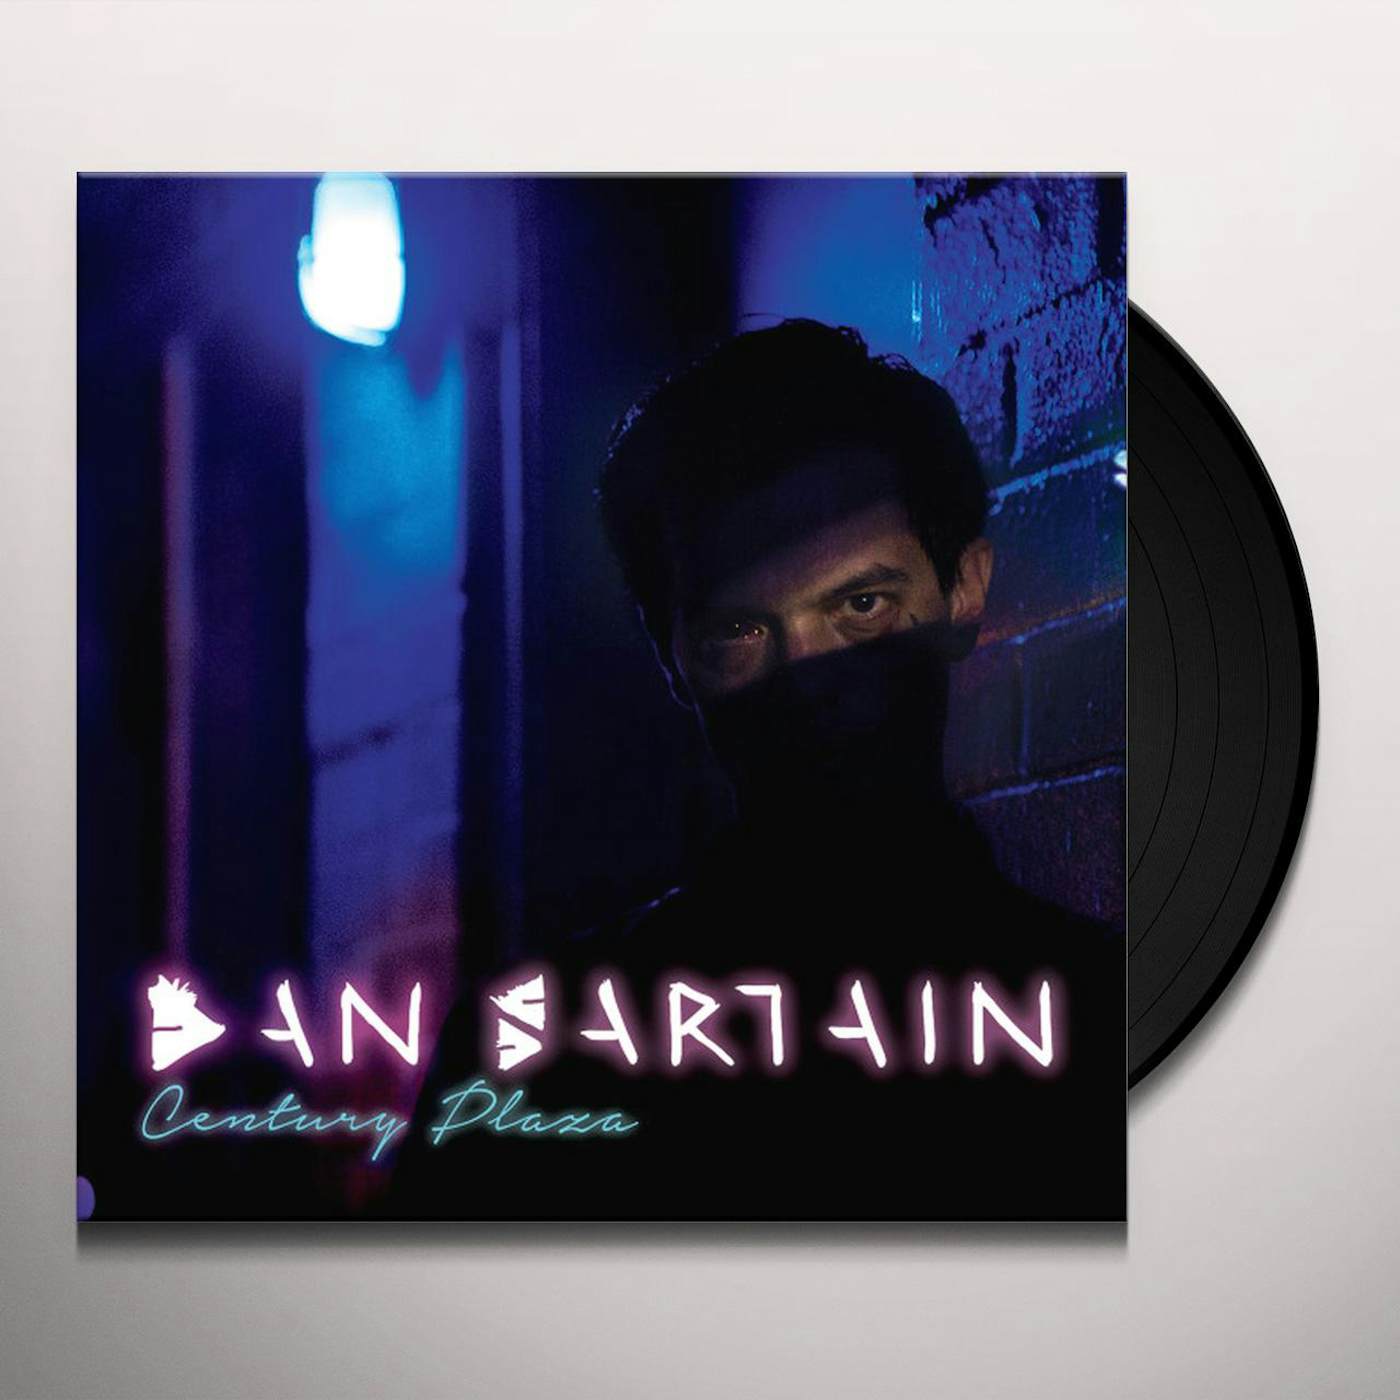 Dan Sartain Century Plaza Vinyl Record